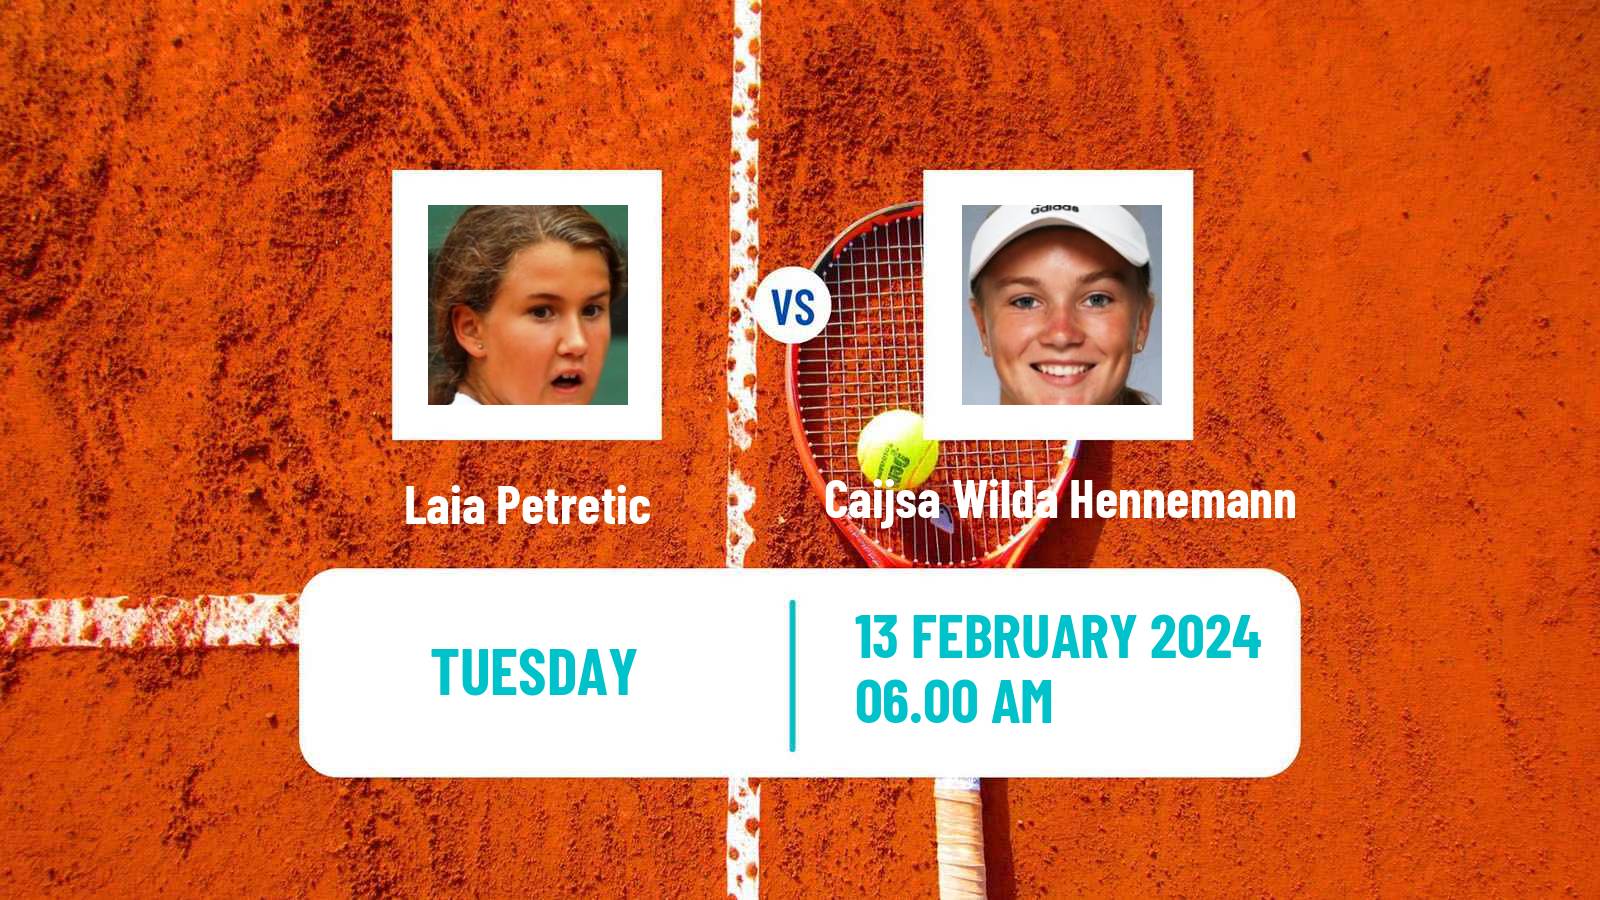 Tennis ITF W15 Manacor Women Laia Petretic - Caijsa Wilda Hennemann